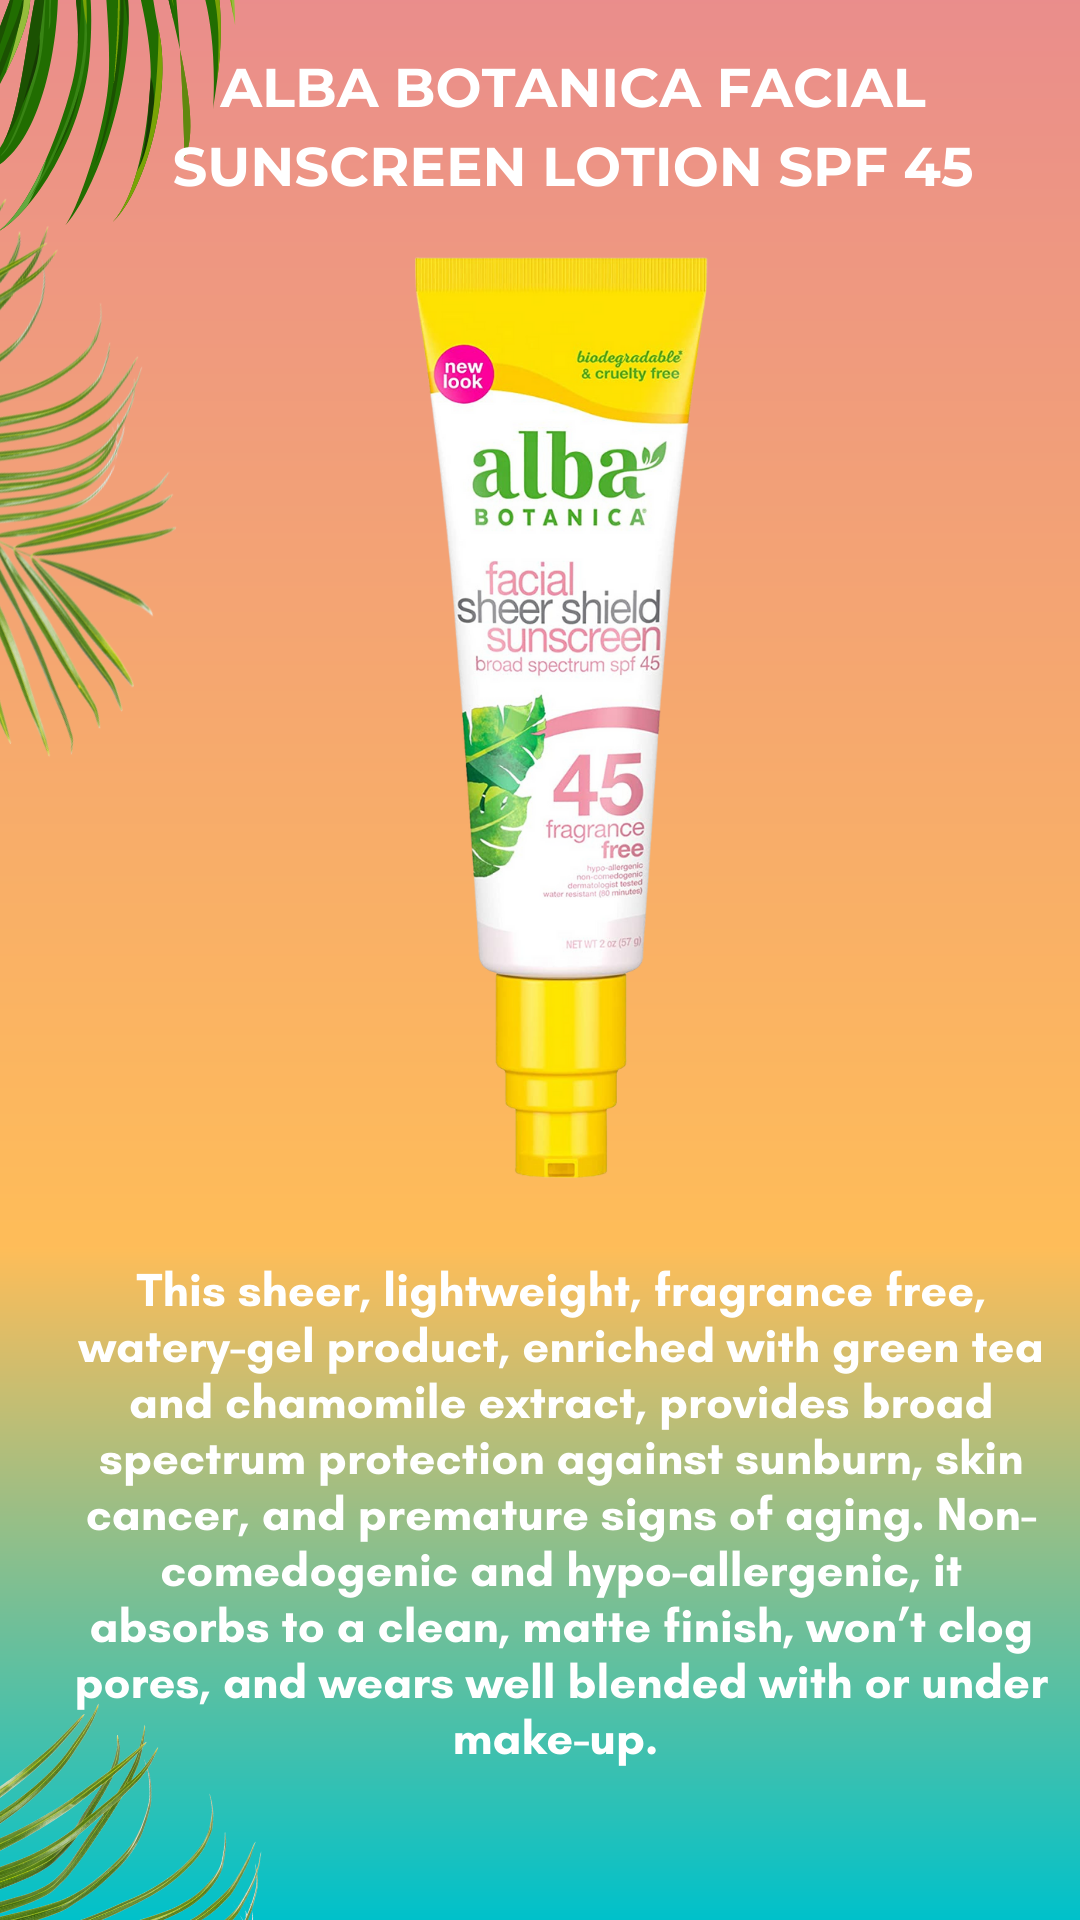 Alba Botanica Facial Sunscreen Lotion SPF 45